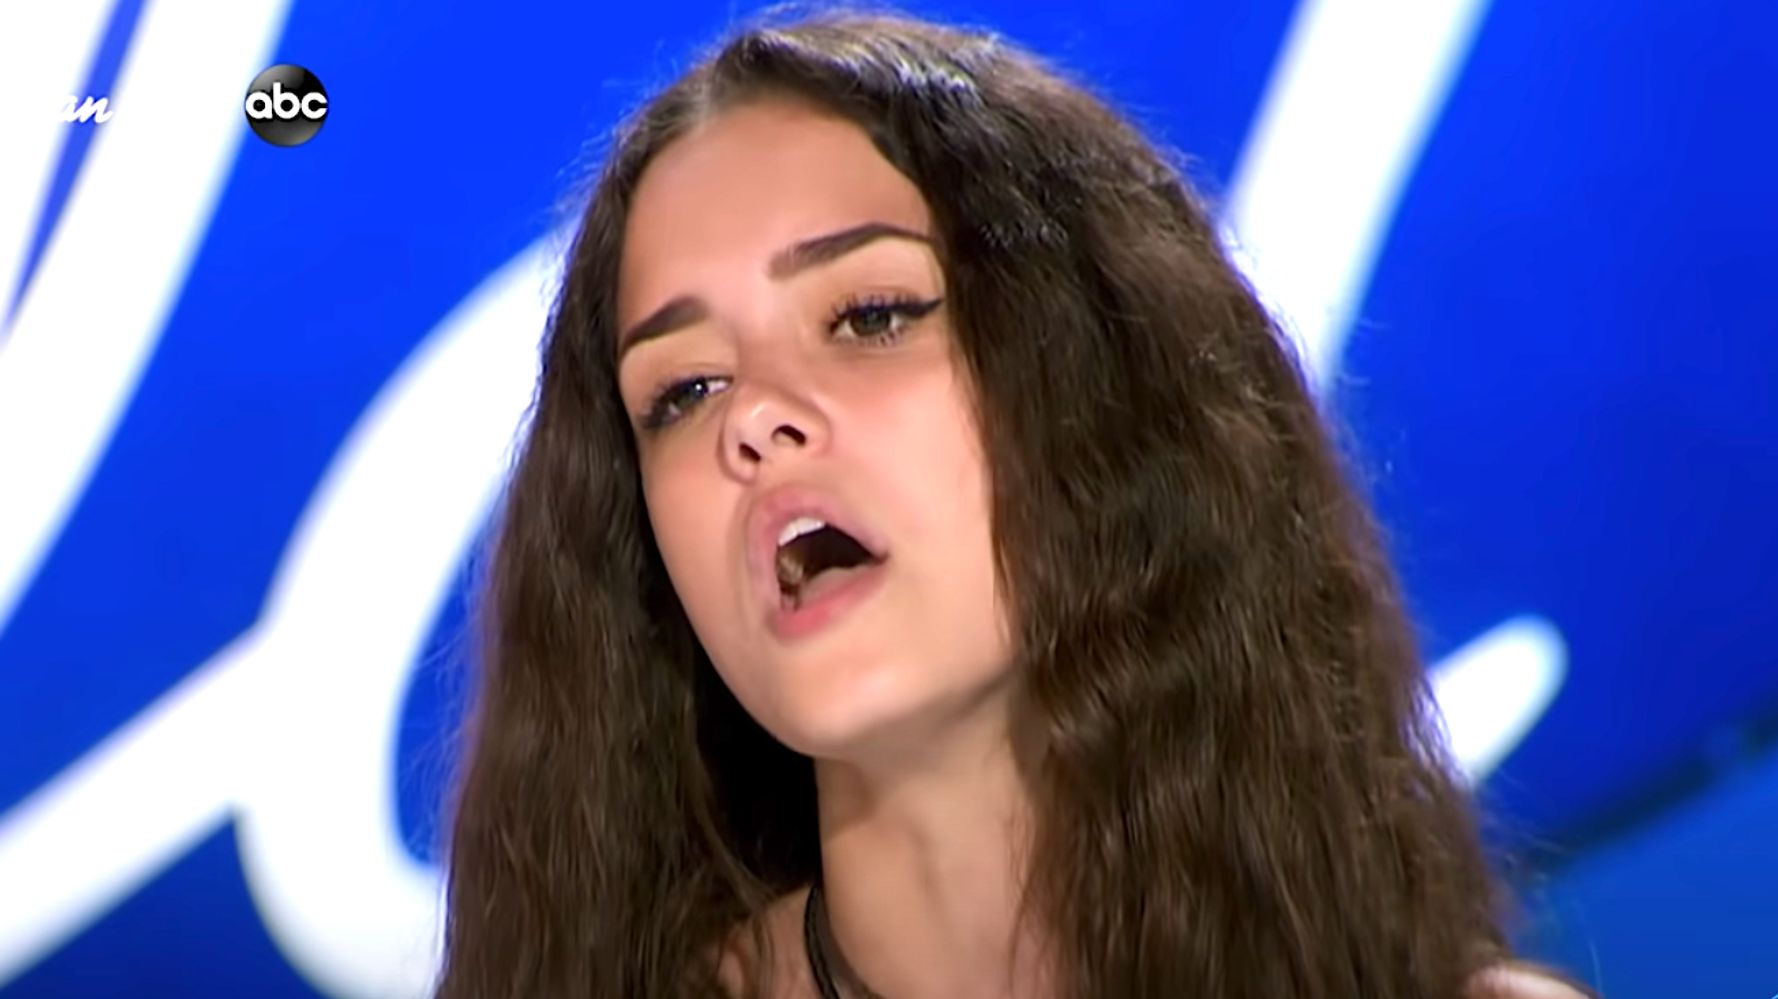 Watch ‘American Idol’ Singer Who Will Be ‘The Damn Winner’, says Luke Bryan